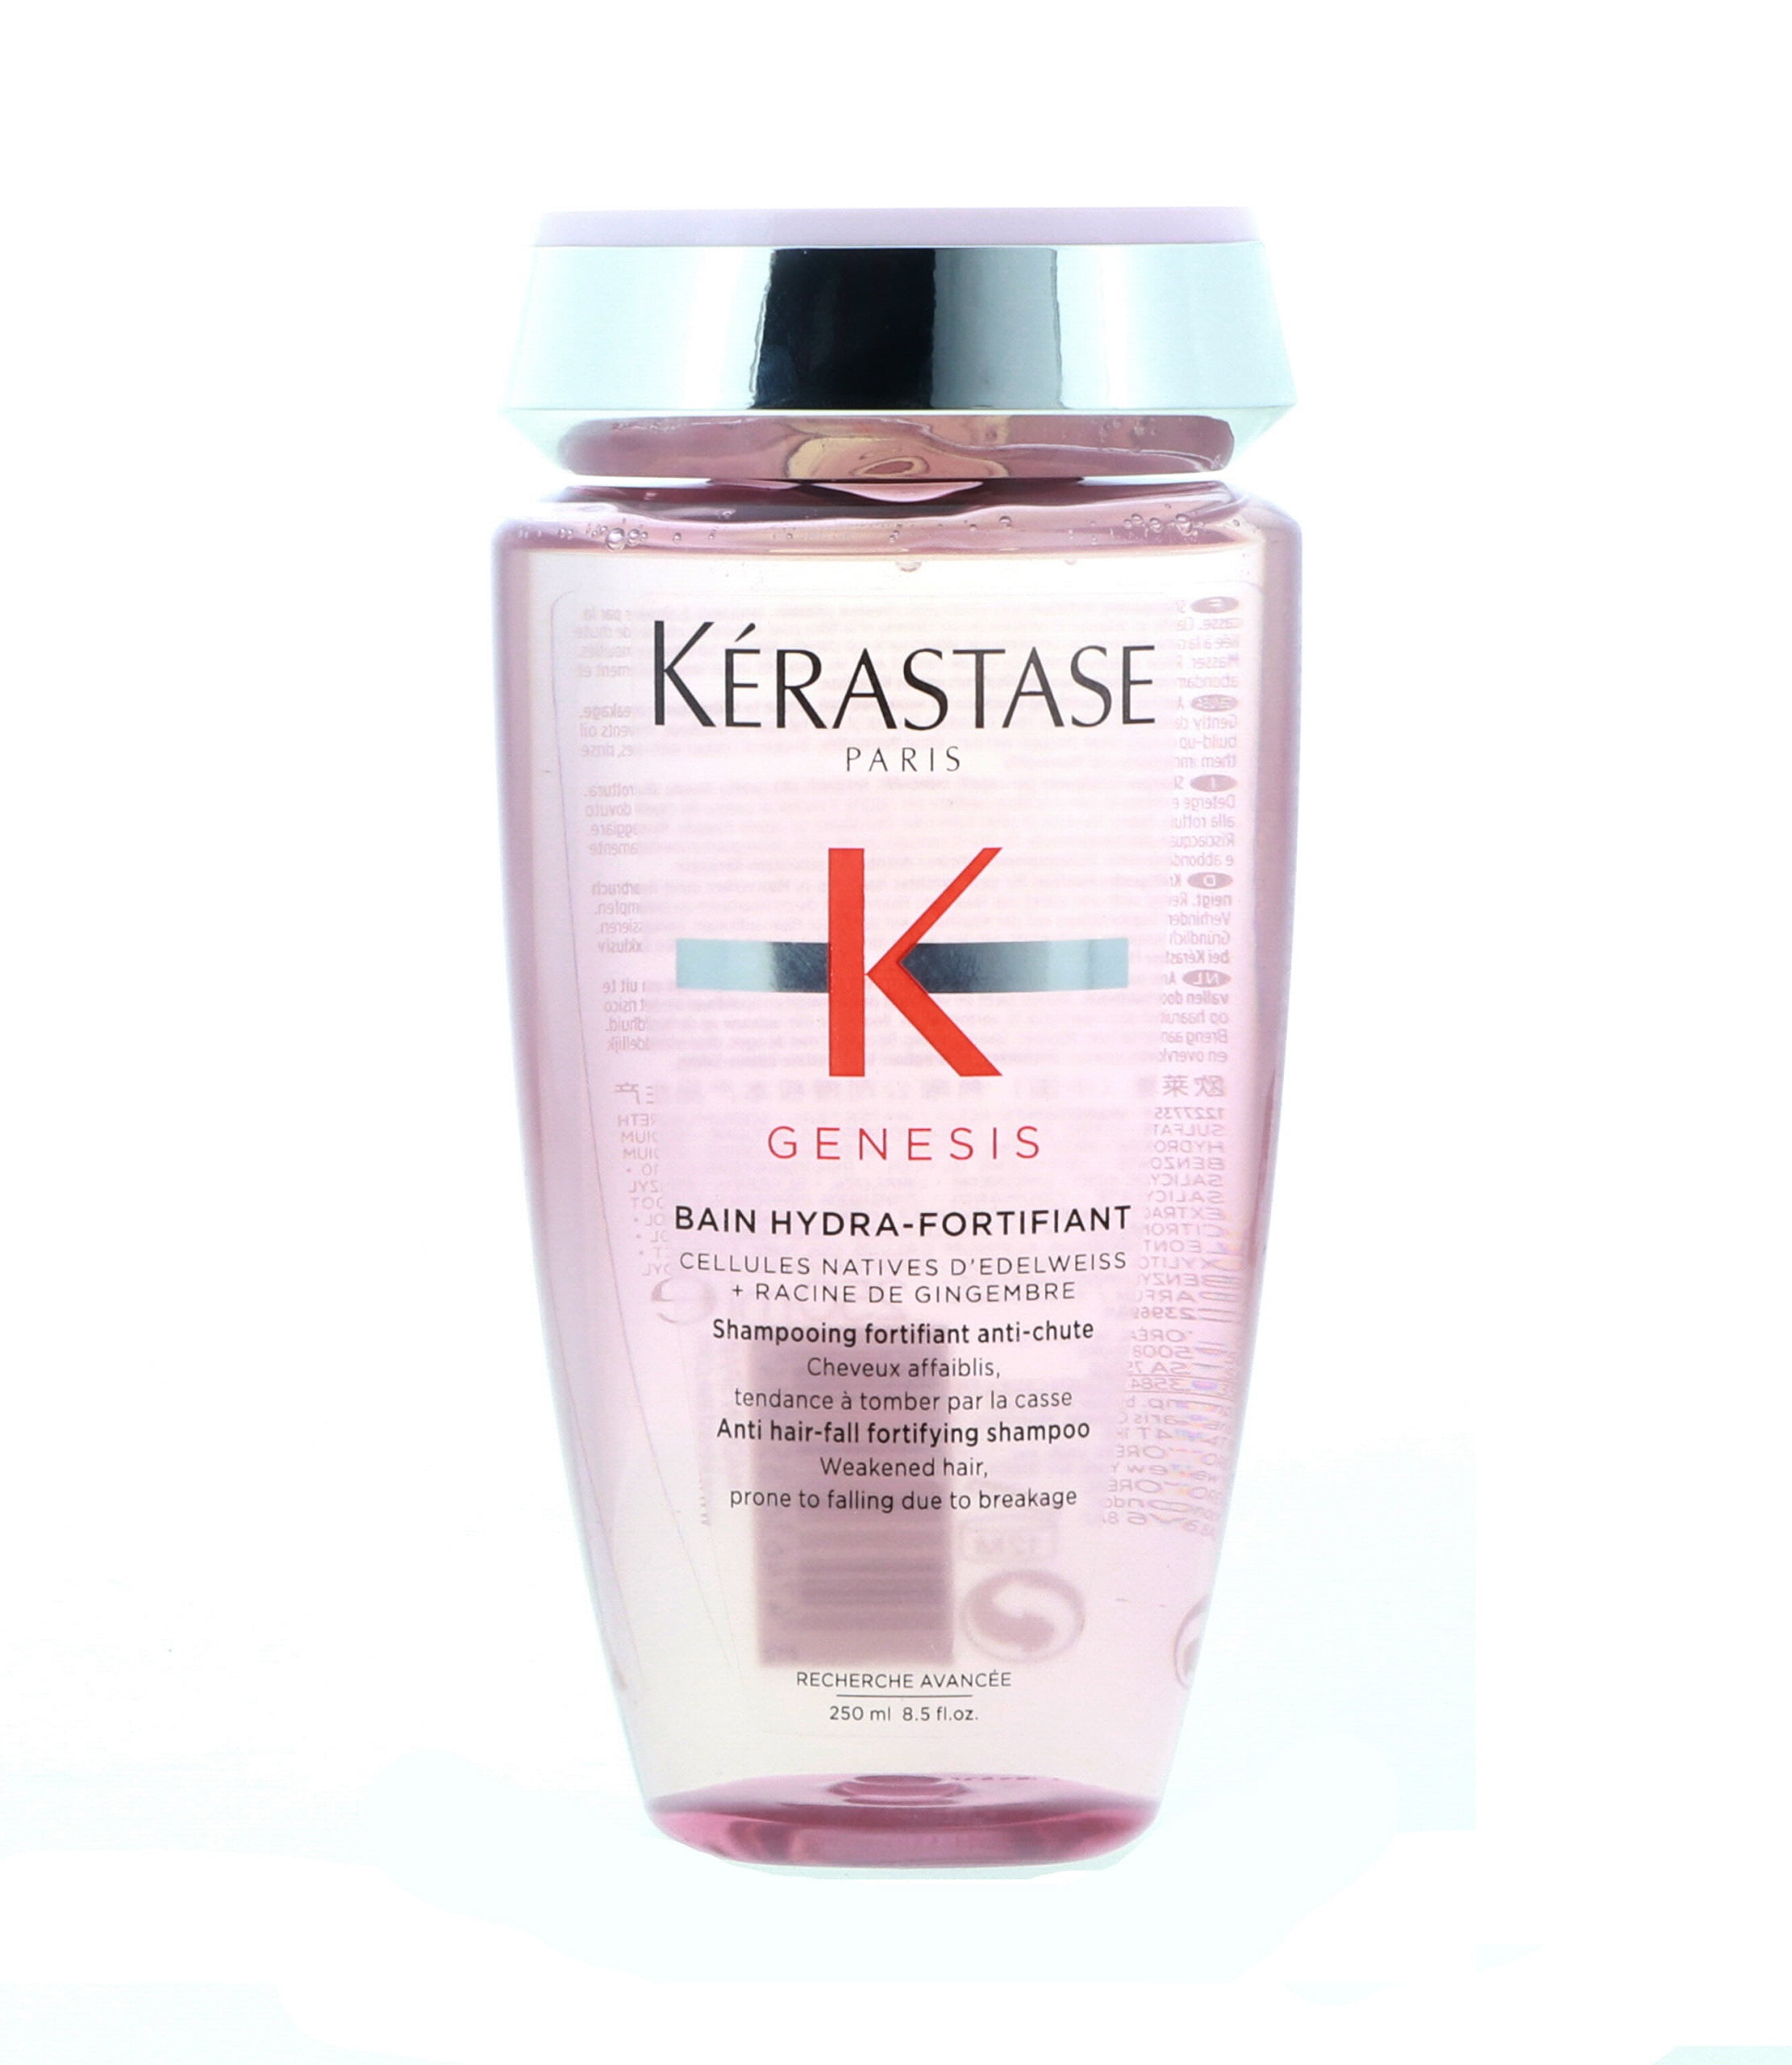 Kerastase Bain Hydra-Fortifiant Shampoo, 8.5 oz 1 Pc, Kerastase Genesis Renforcateur Fondant Conditioner, oz 1 - Walmart.com